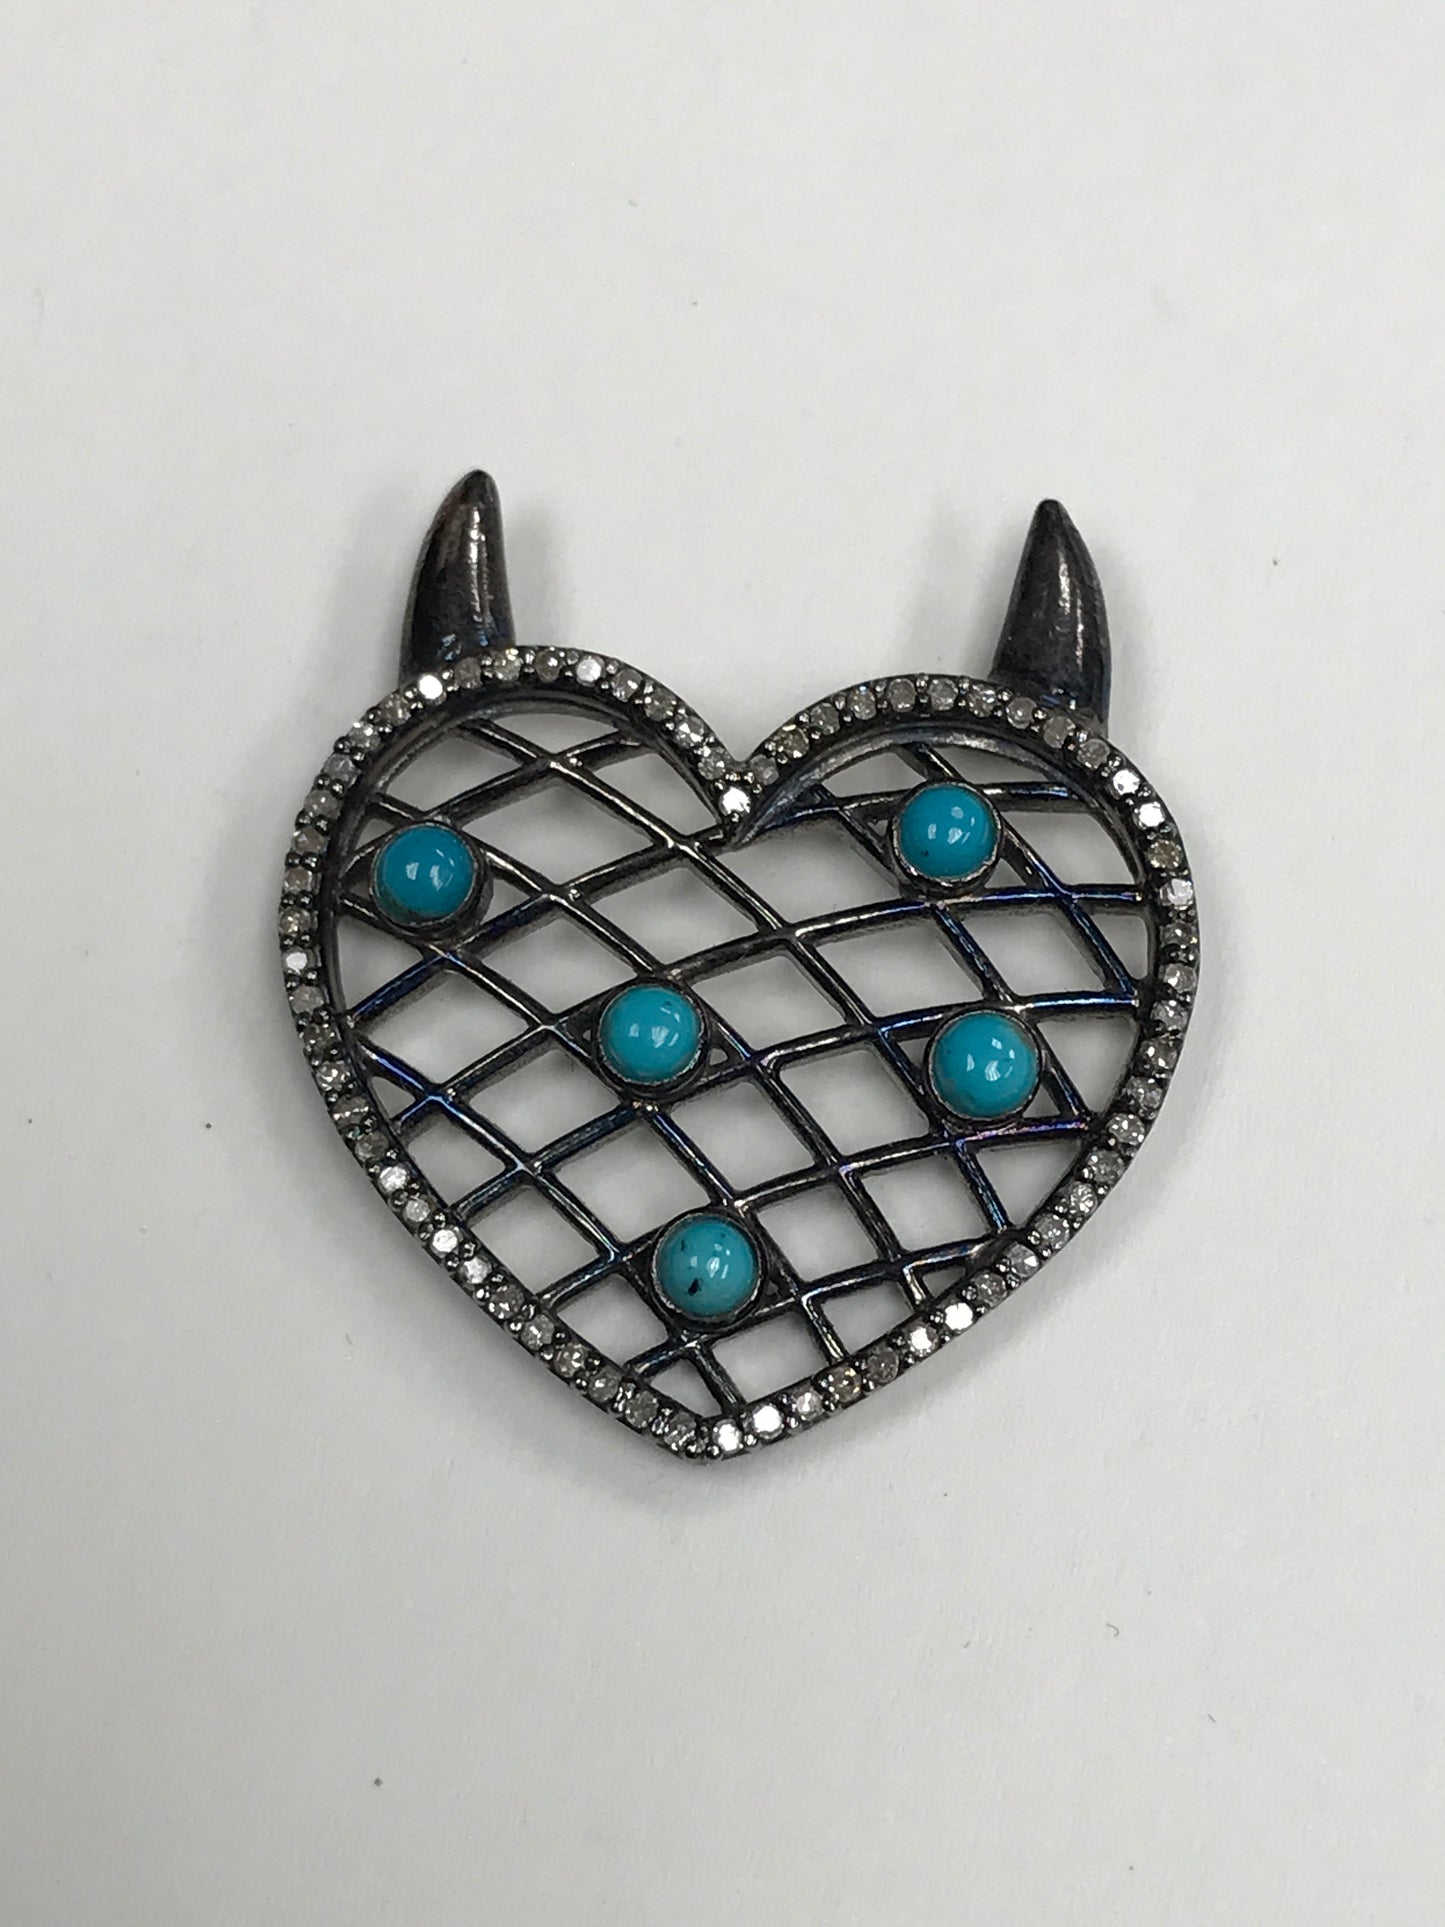 Diamond Embossed Heart Shape Pendant, Pave Diamond Pendant, Pave Embossed Heart Shape Necklace, Approx 32 x 28mm